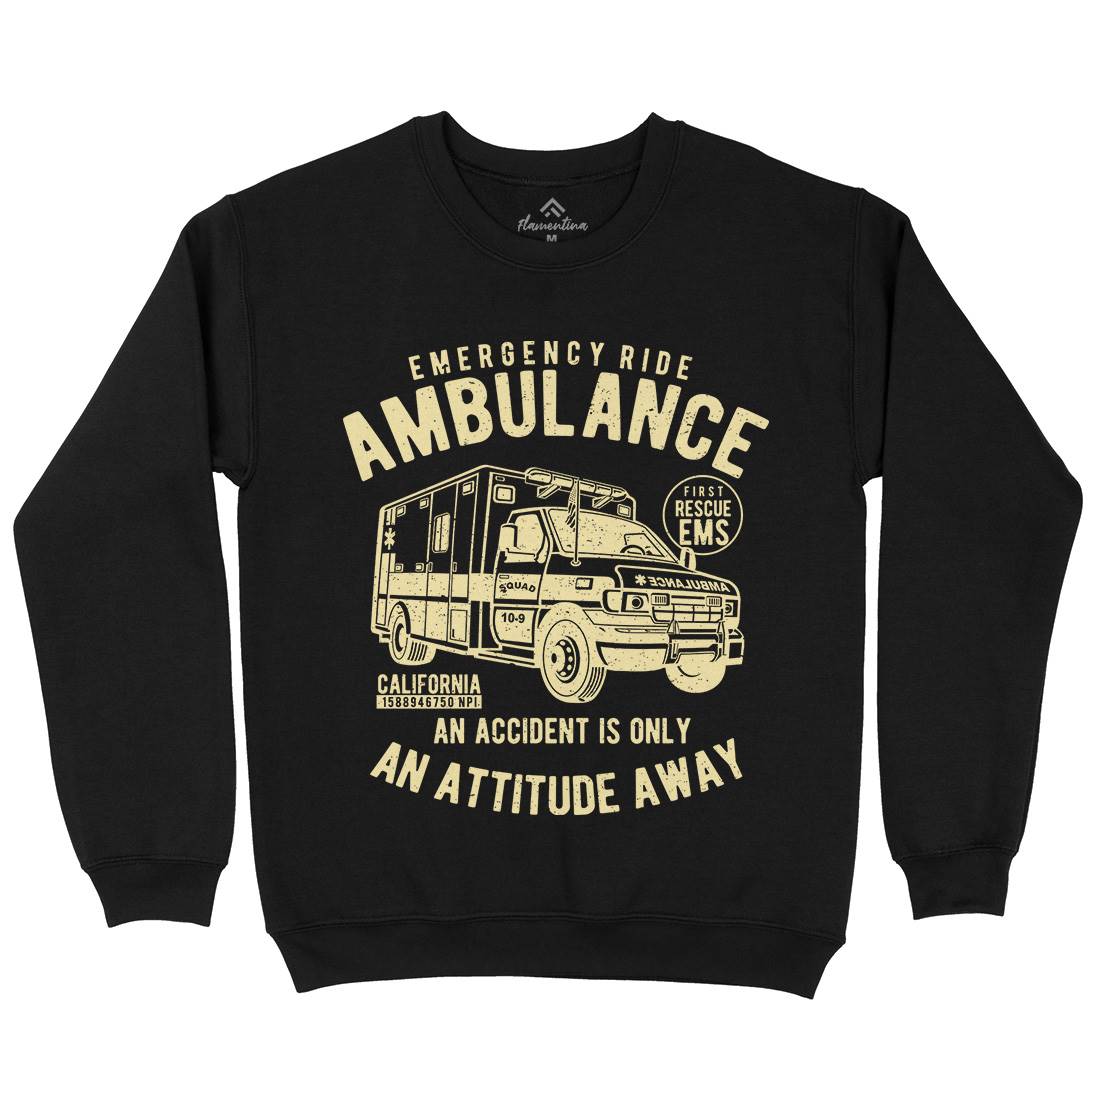 Ambulance Kids Crew Neck Sweatshirt Vehicles A003